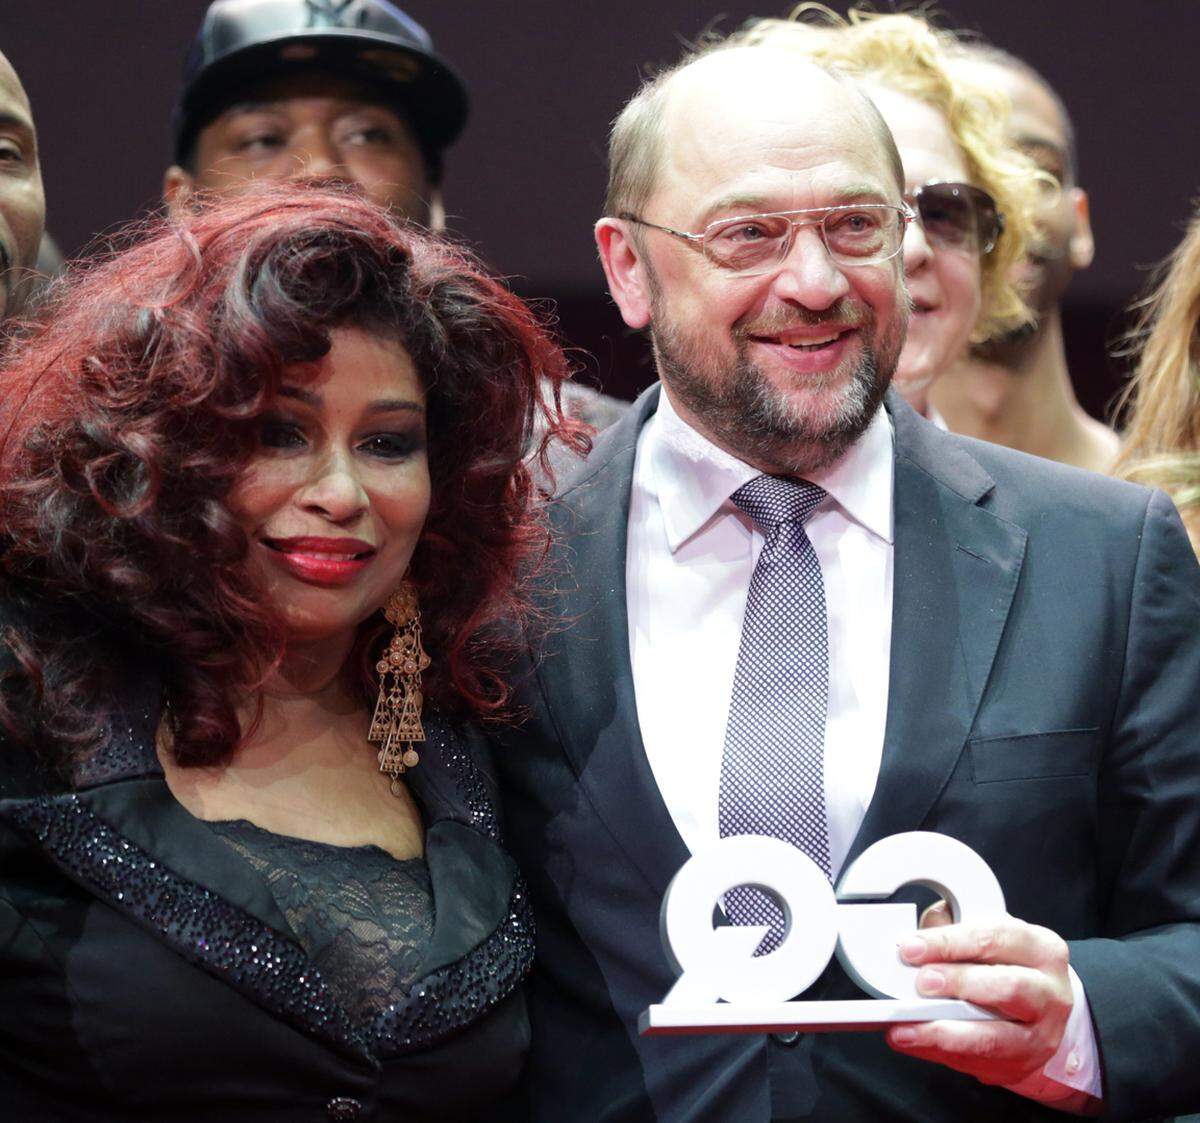 EU-Parlamentspräsident Martin Schulz (SPD) wurde mit dem Politik-Award geehrt.